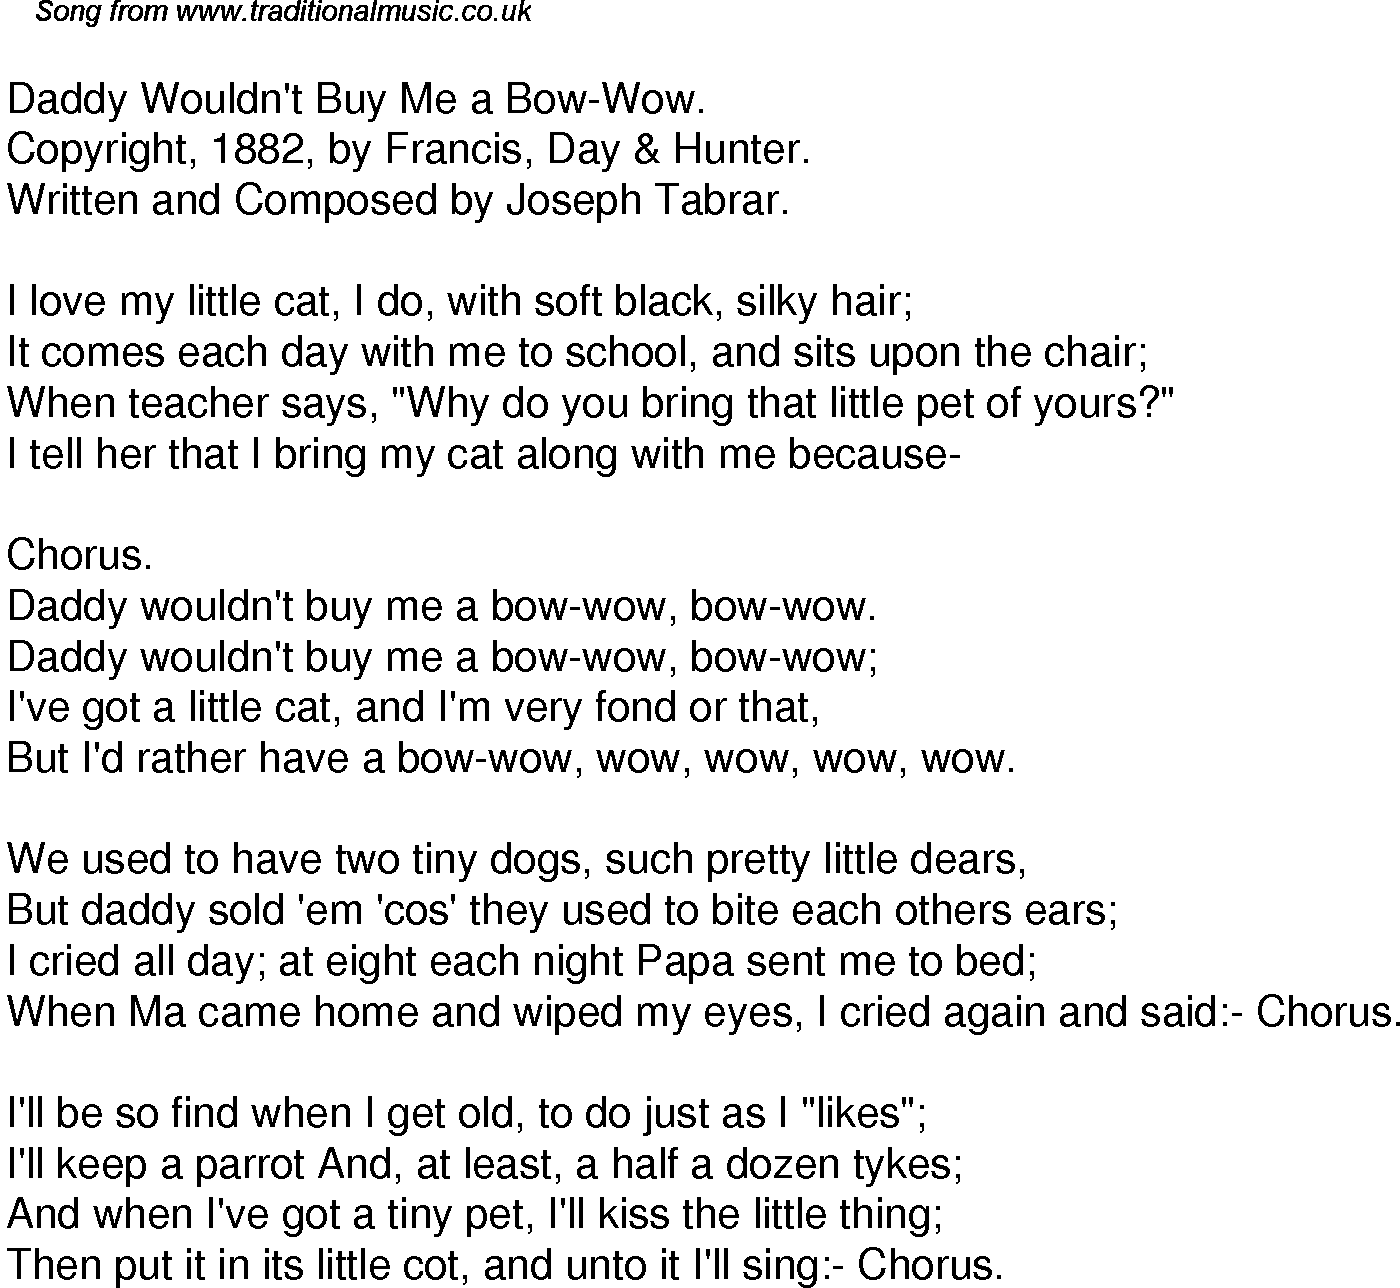 Greatest dad lyrics